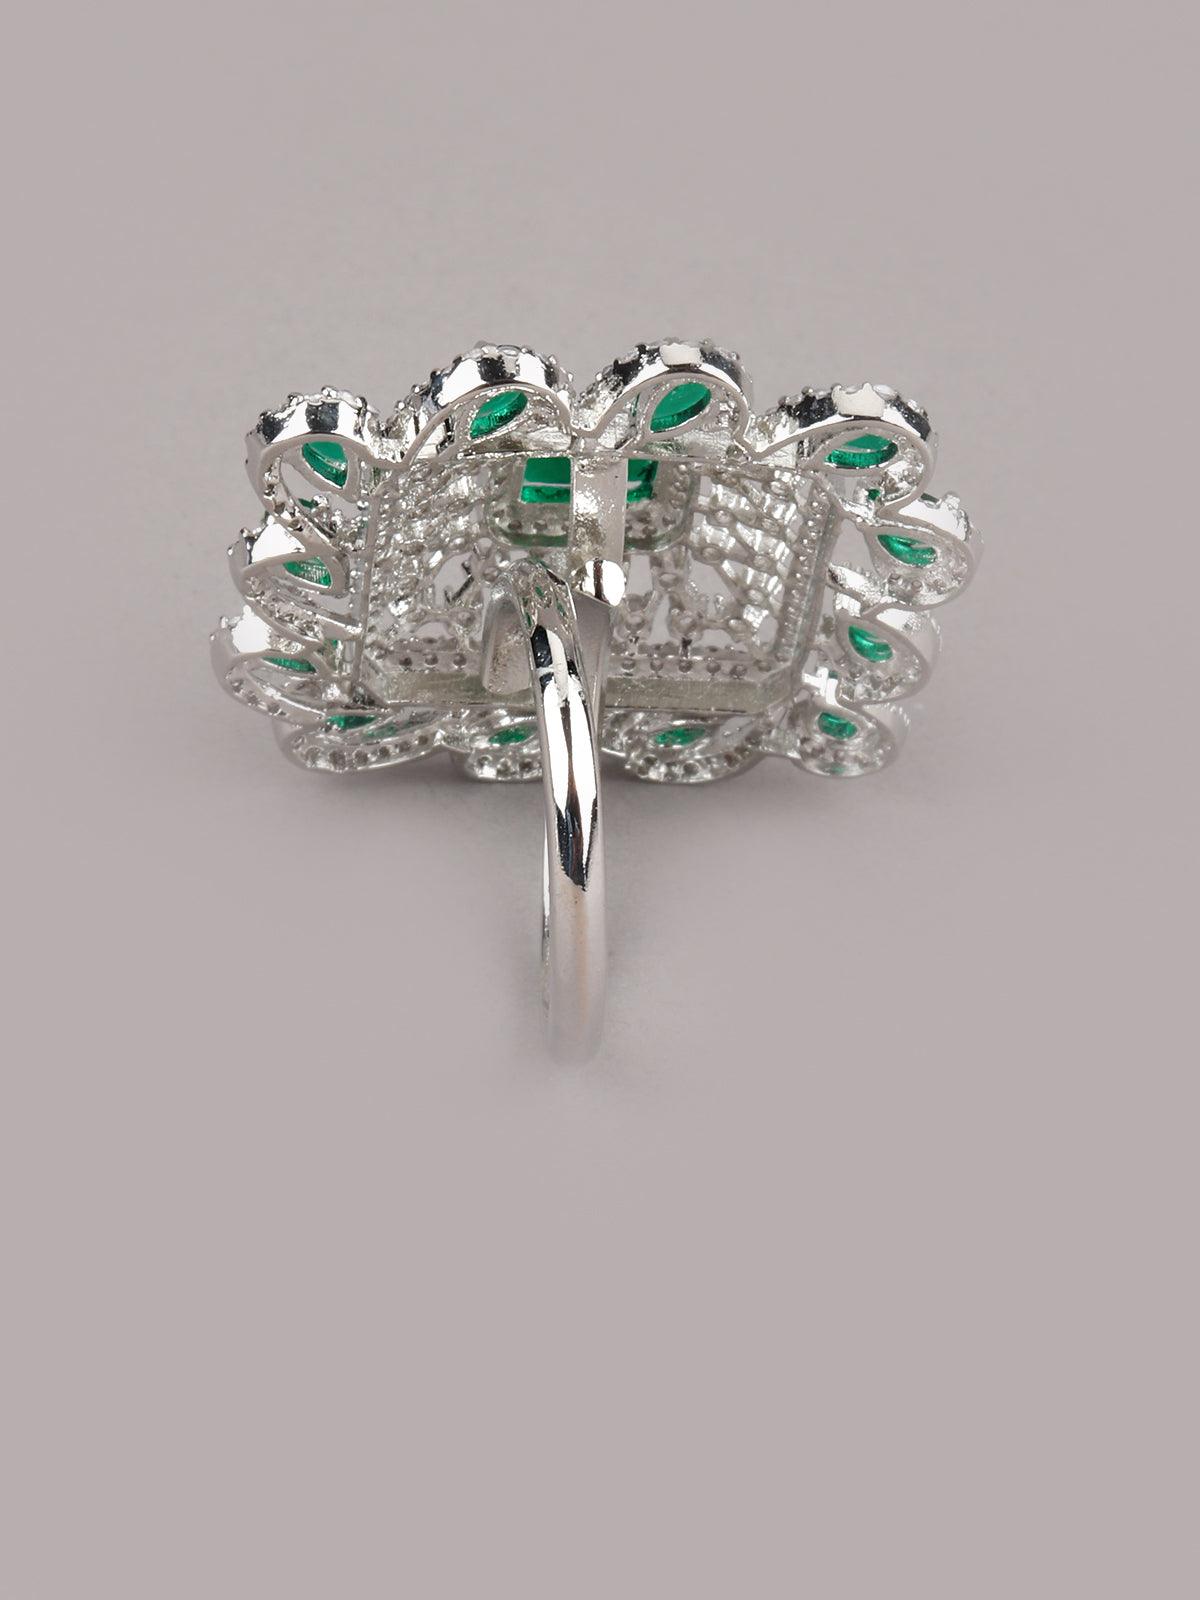 Emerald Crystalised Square Statement Ring - Odette